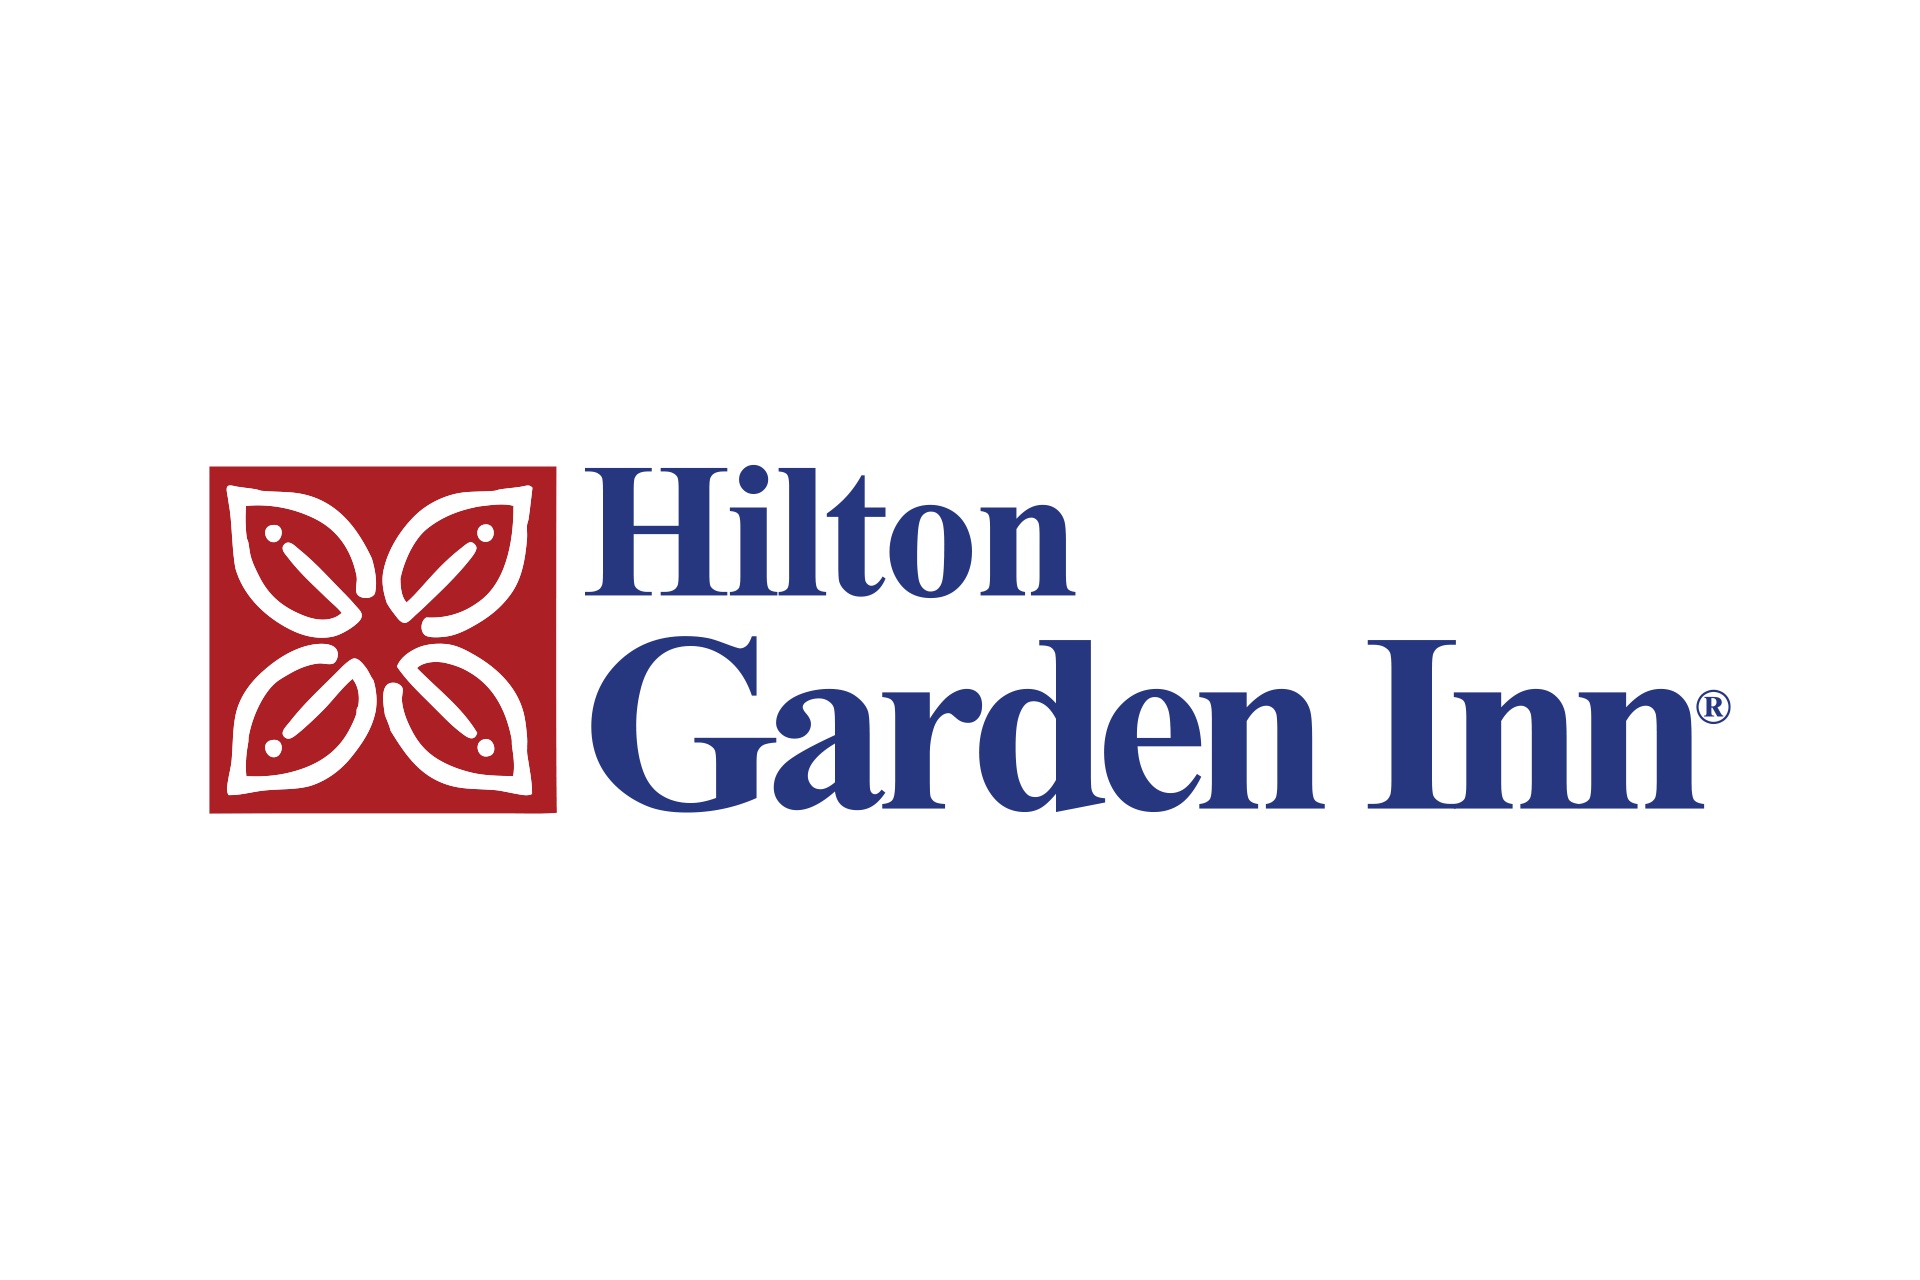 Hilton Garden Inn Logo Arkansas Political Science Association